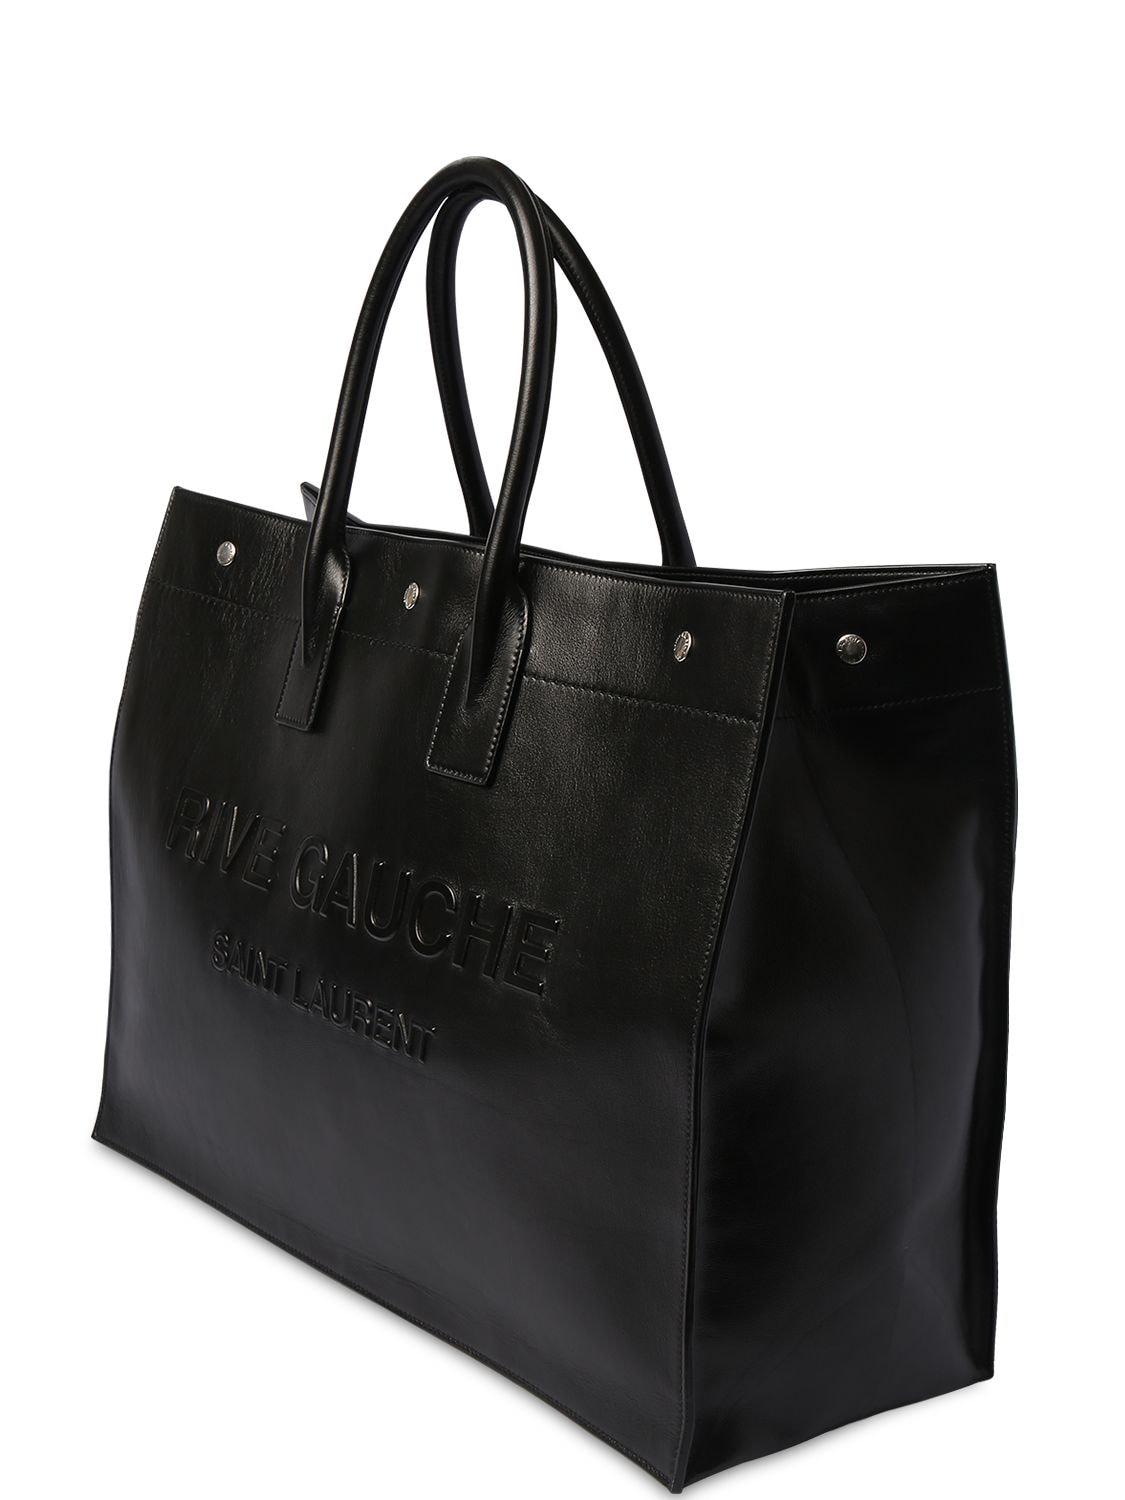 Saint Laurent Large Rive Gauche Leather Tote Bag in Black